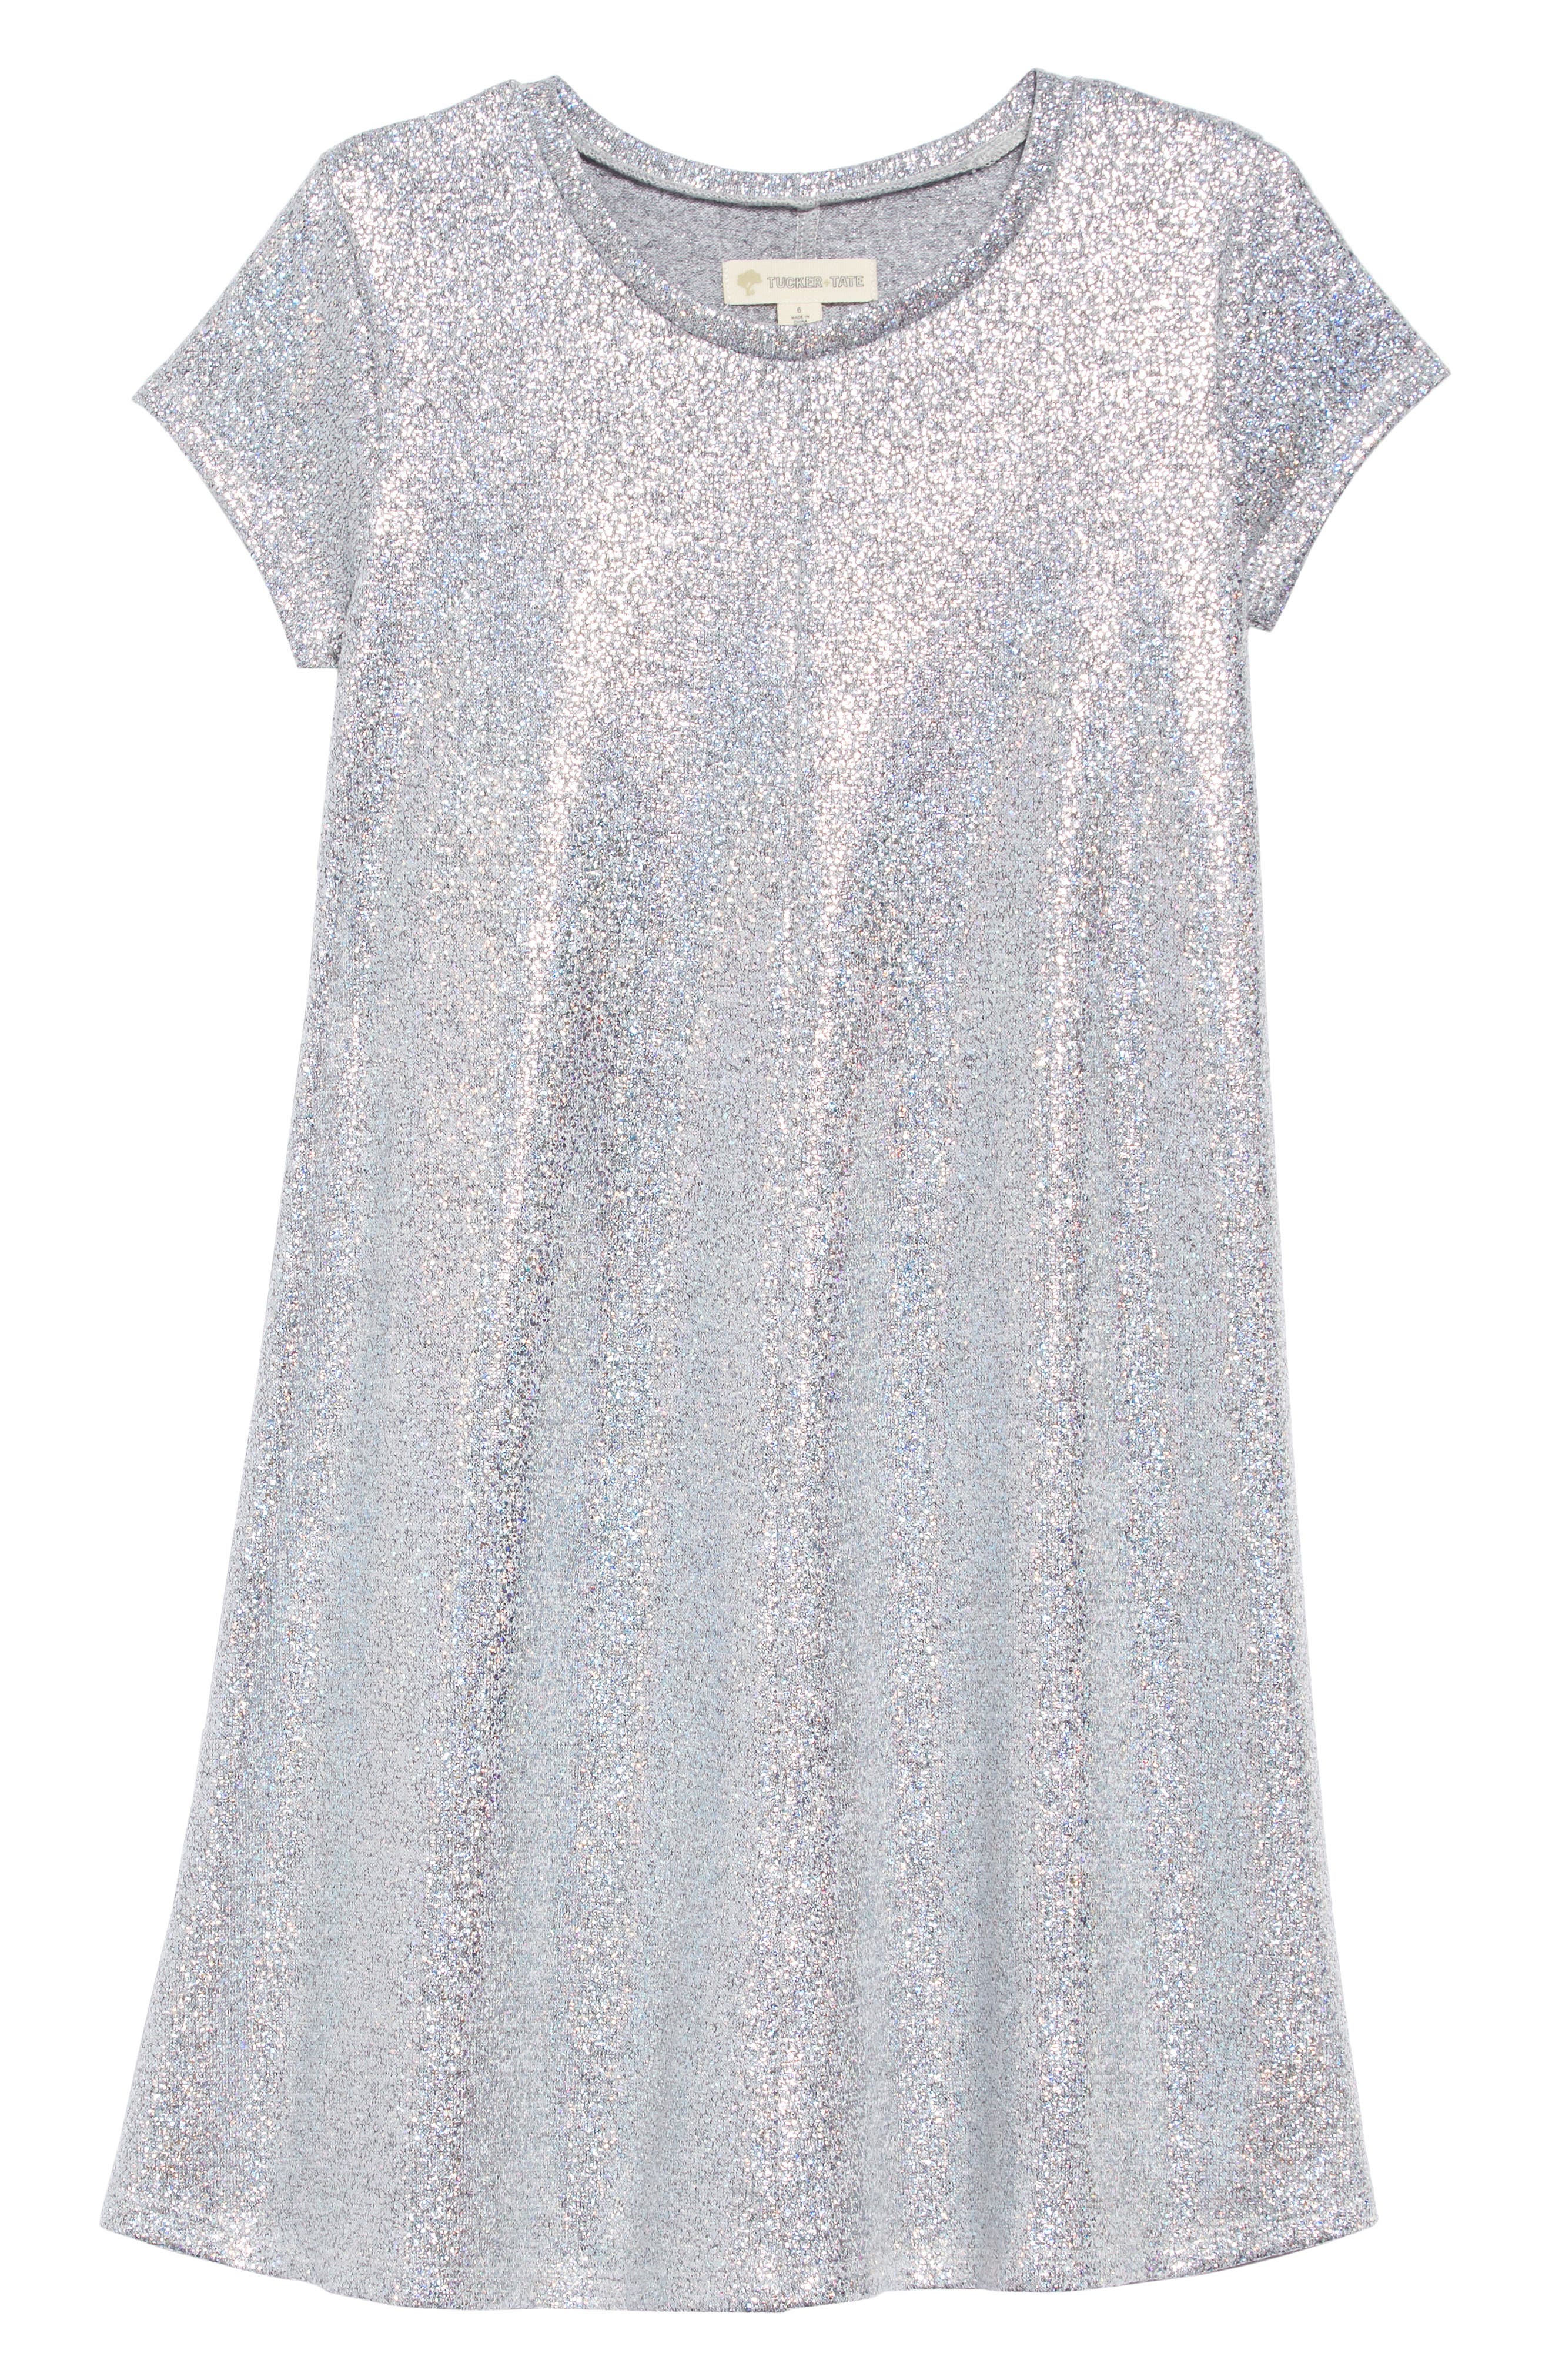 Tucker + Tate Super Sparkle Dress in Metallic Silver